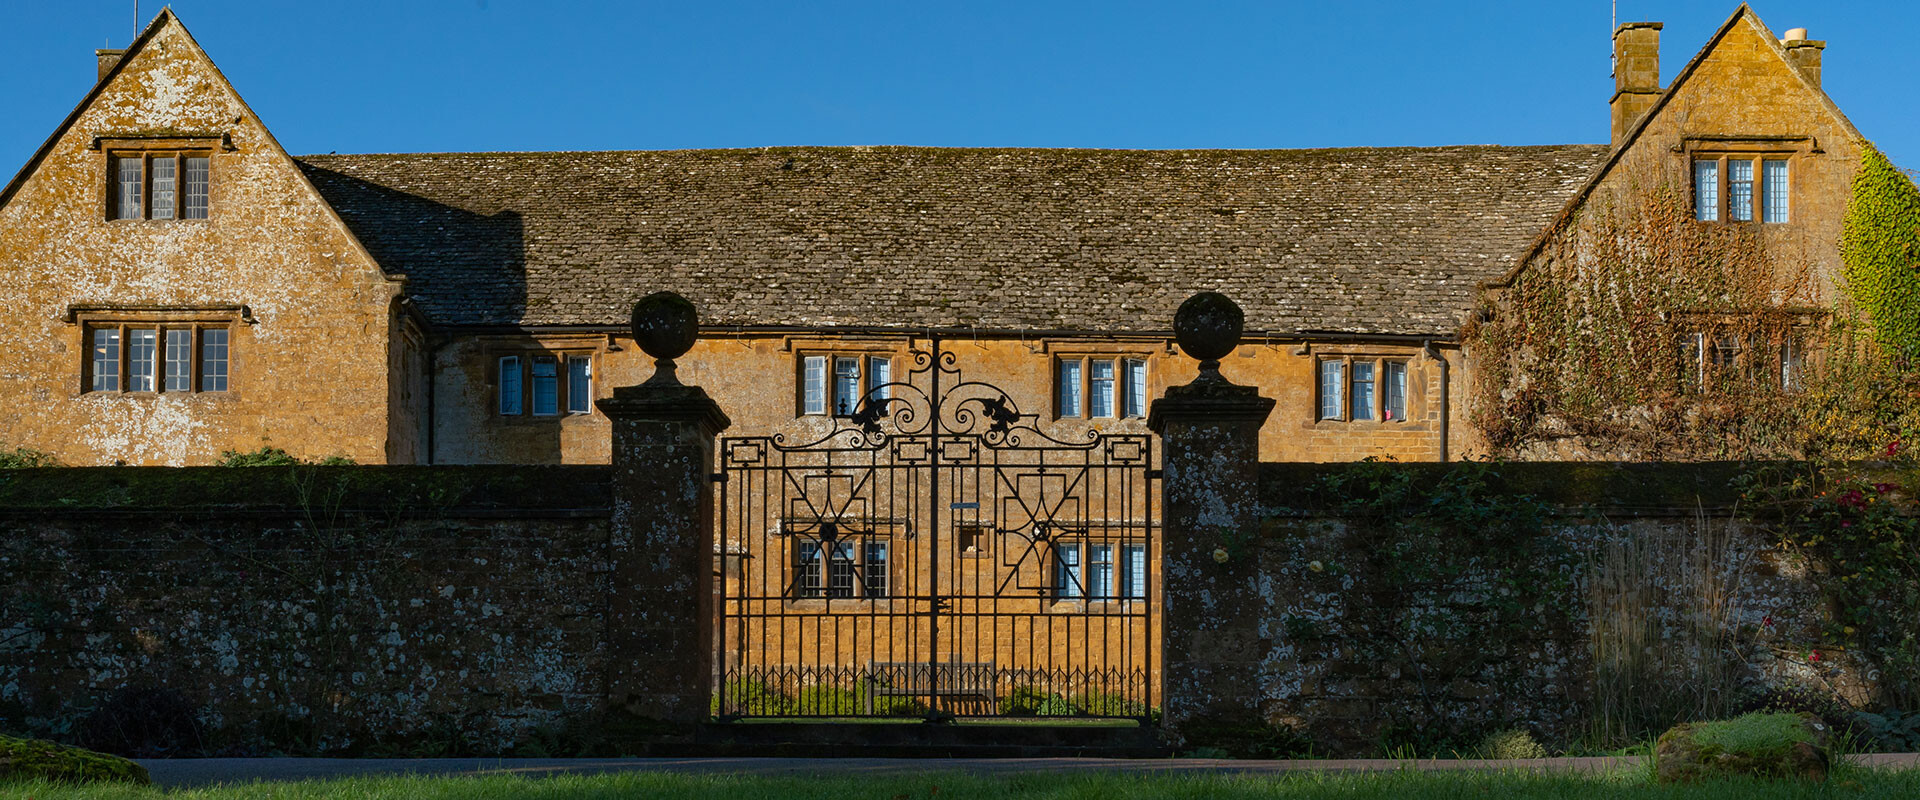 Bell - Tudor Hall Yaz Okulu genel resmi